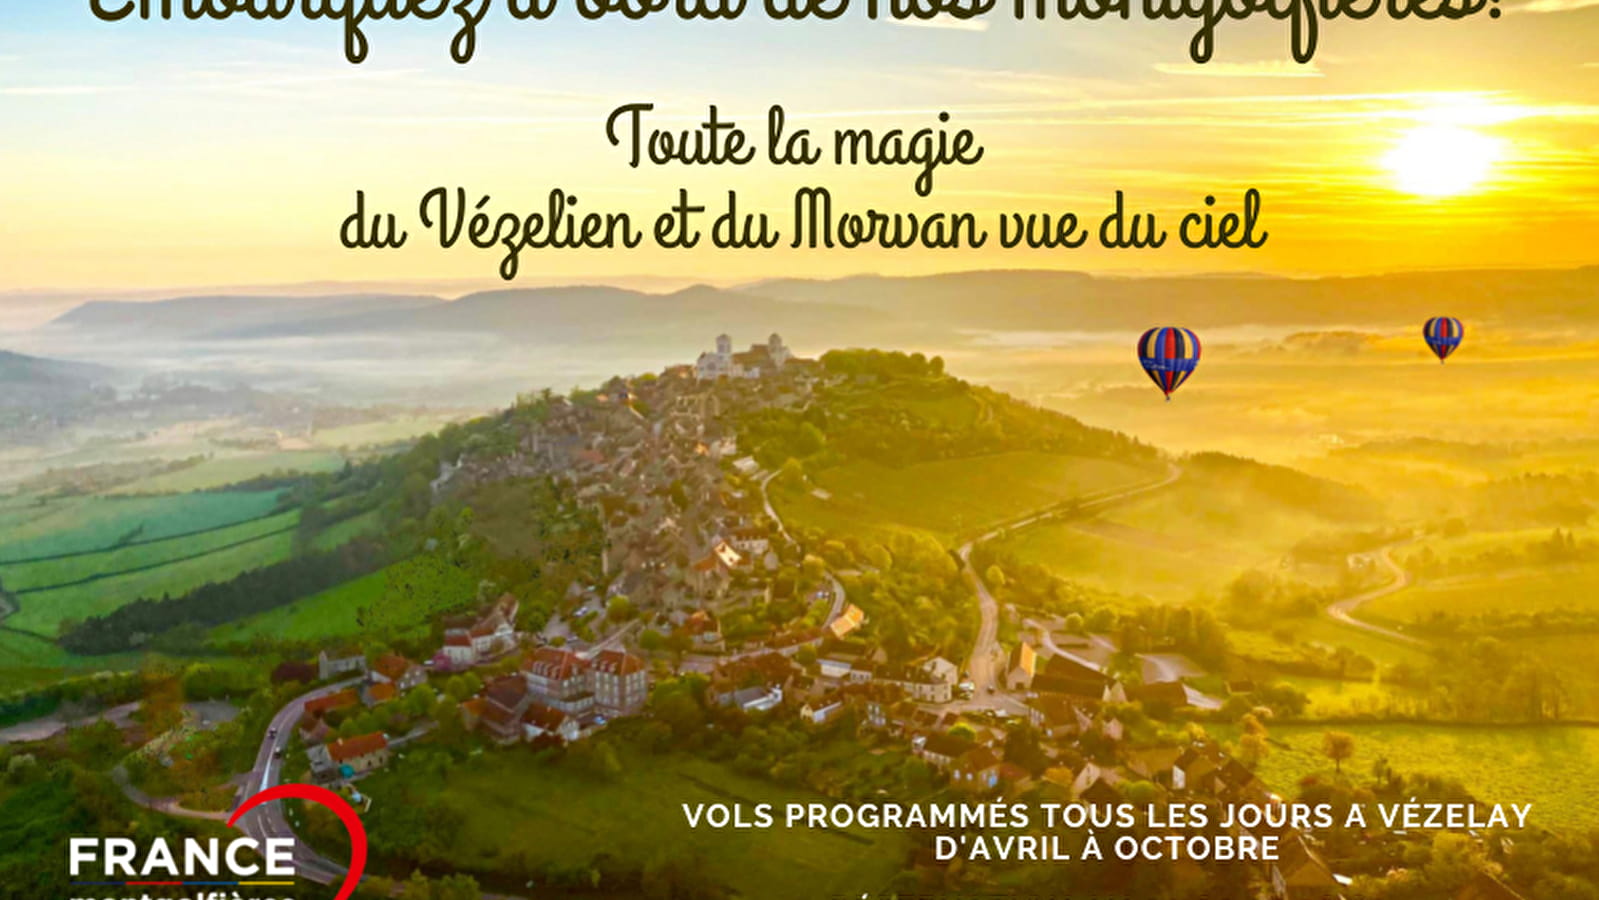 France Montgolfières - Balloons Flights